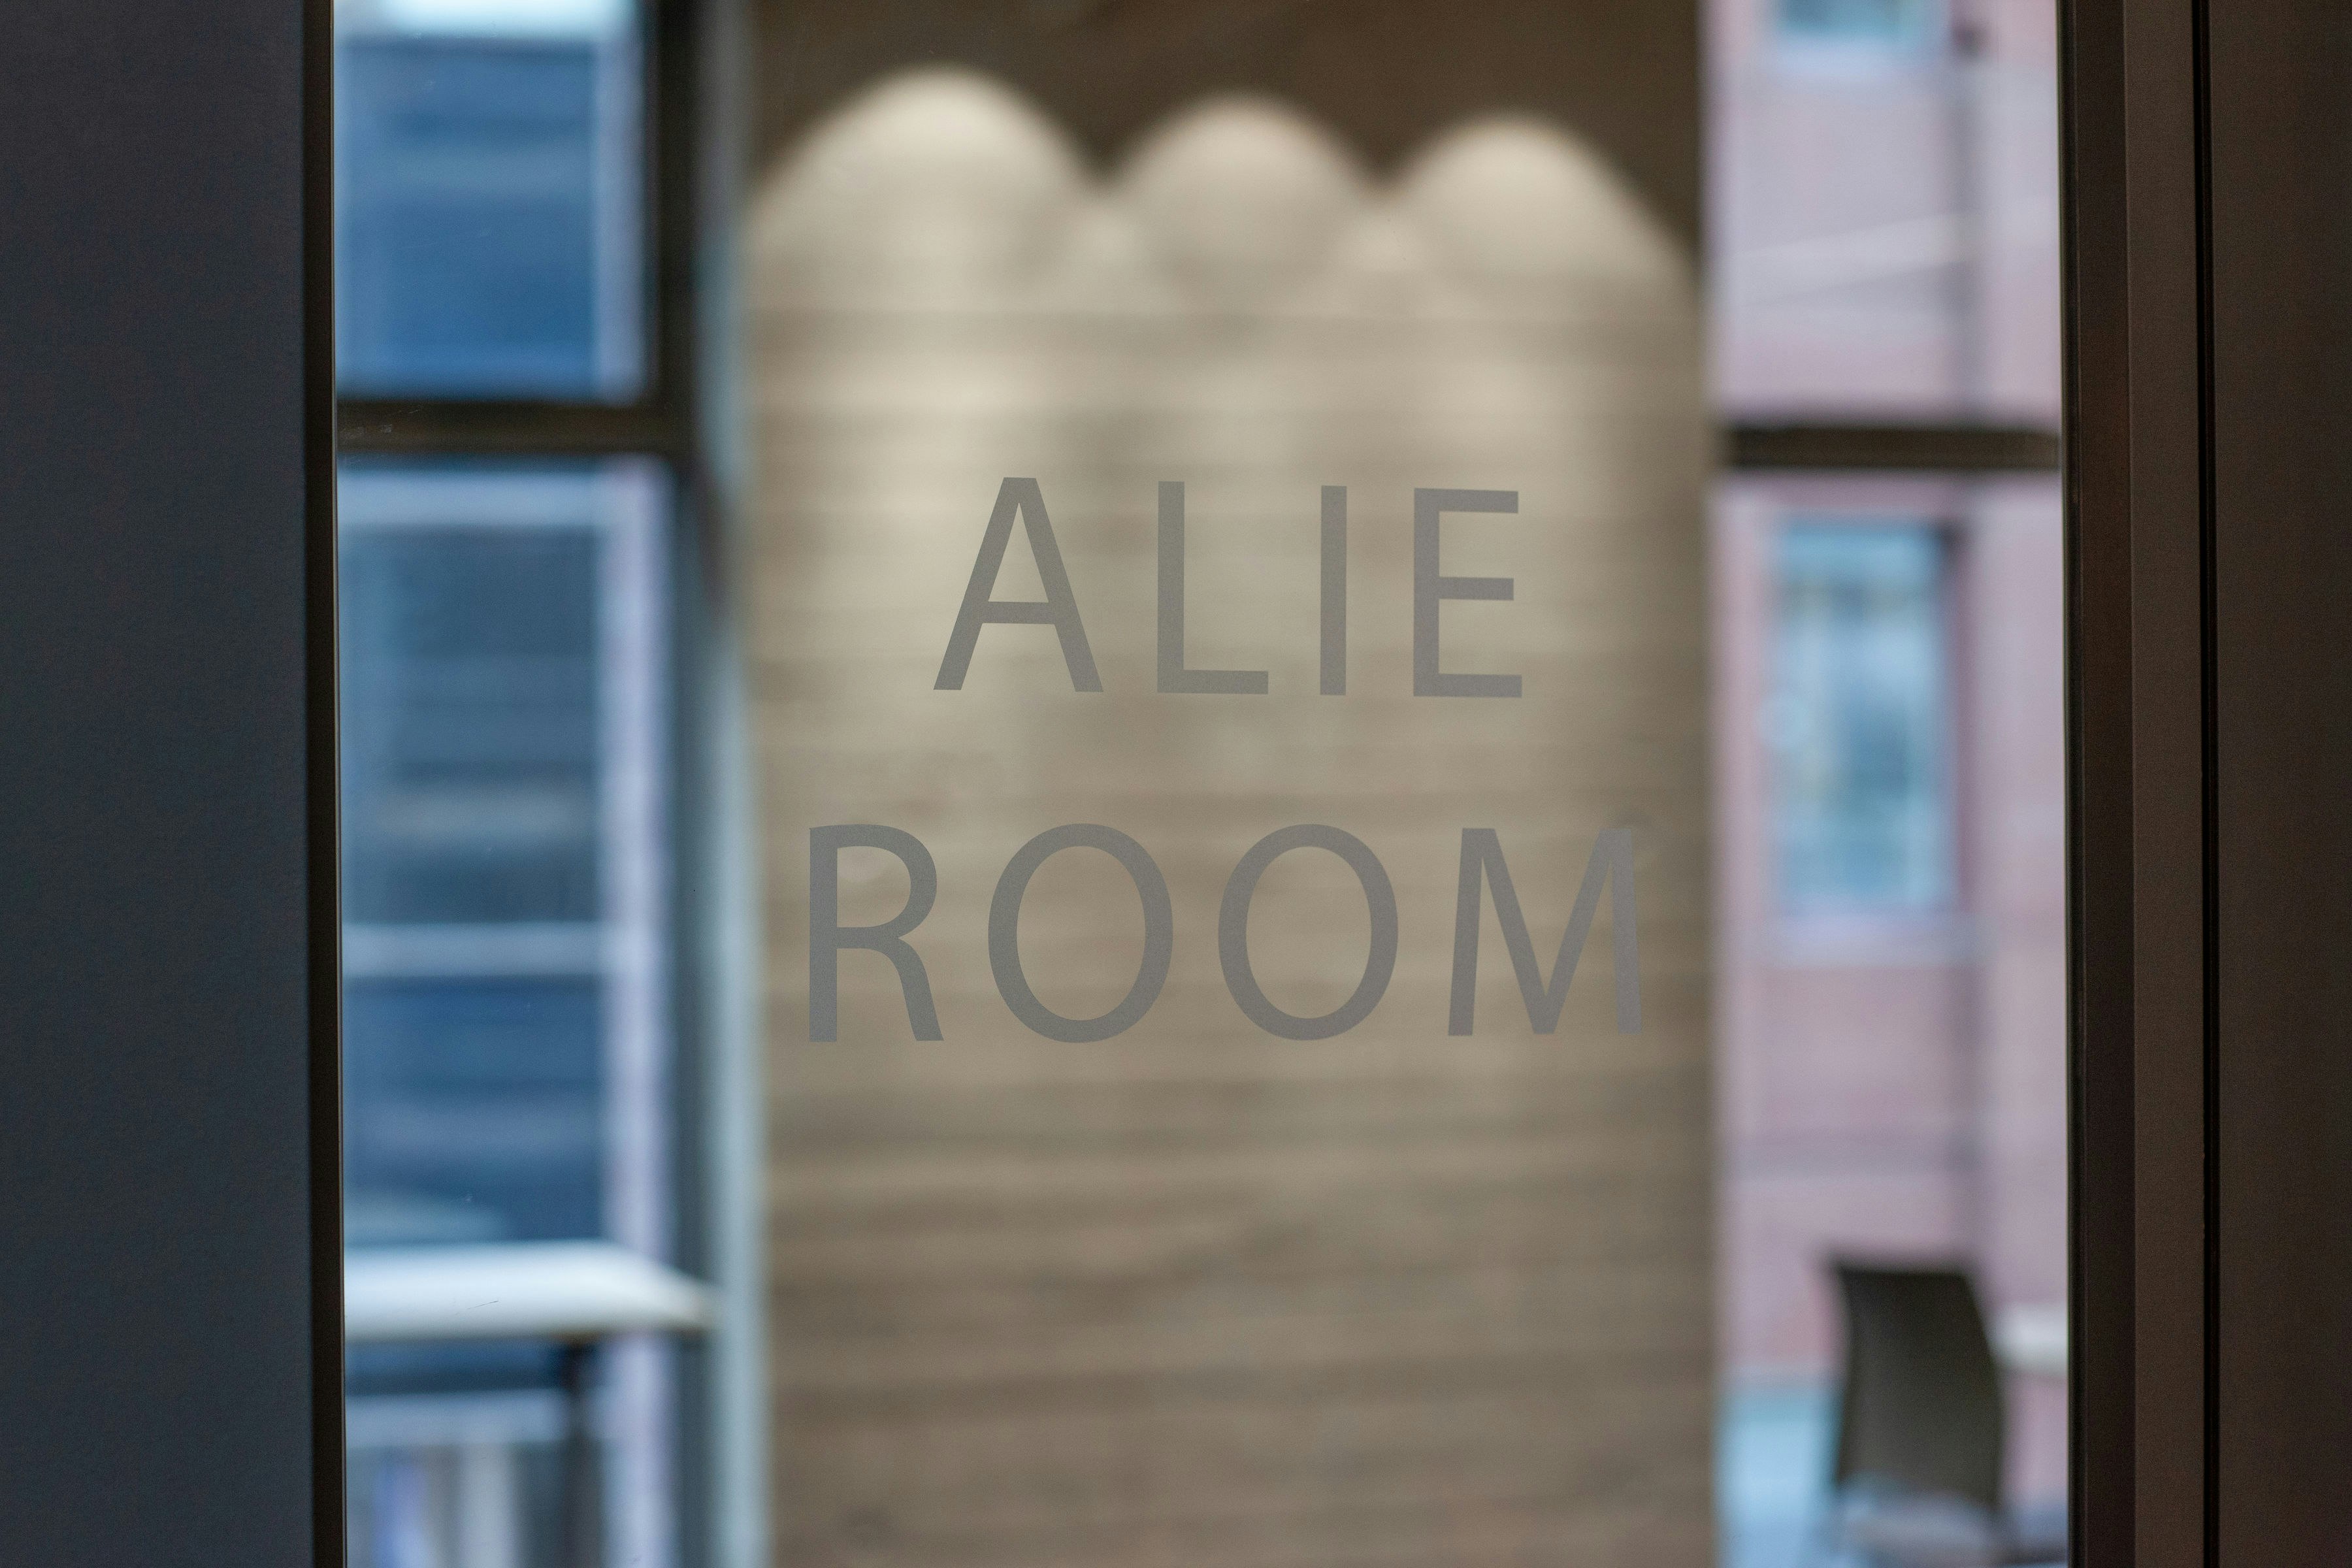 Events @ No 6 - Alie Room image 2